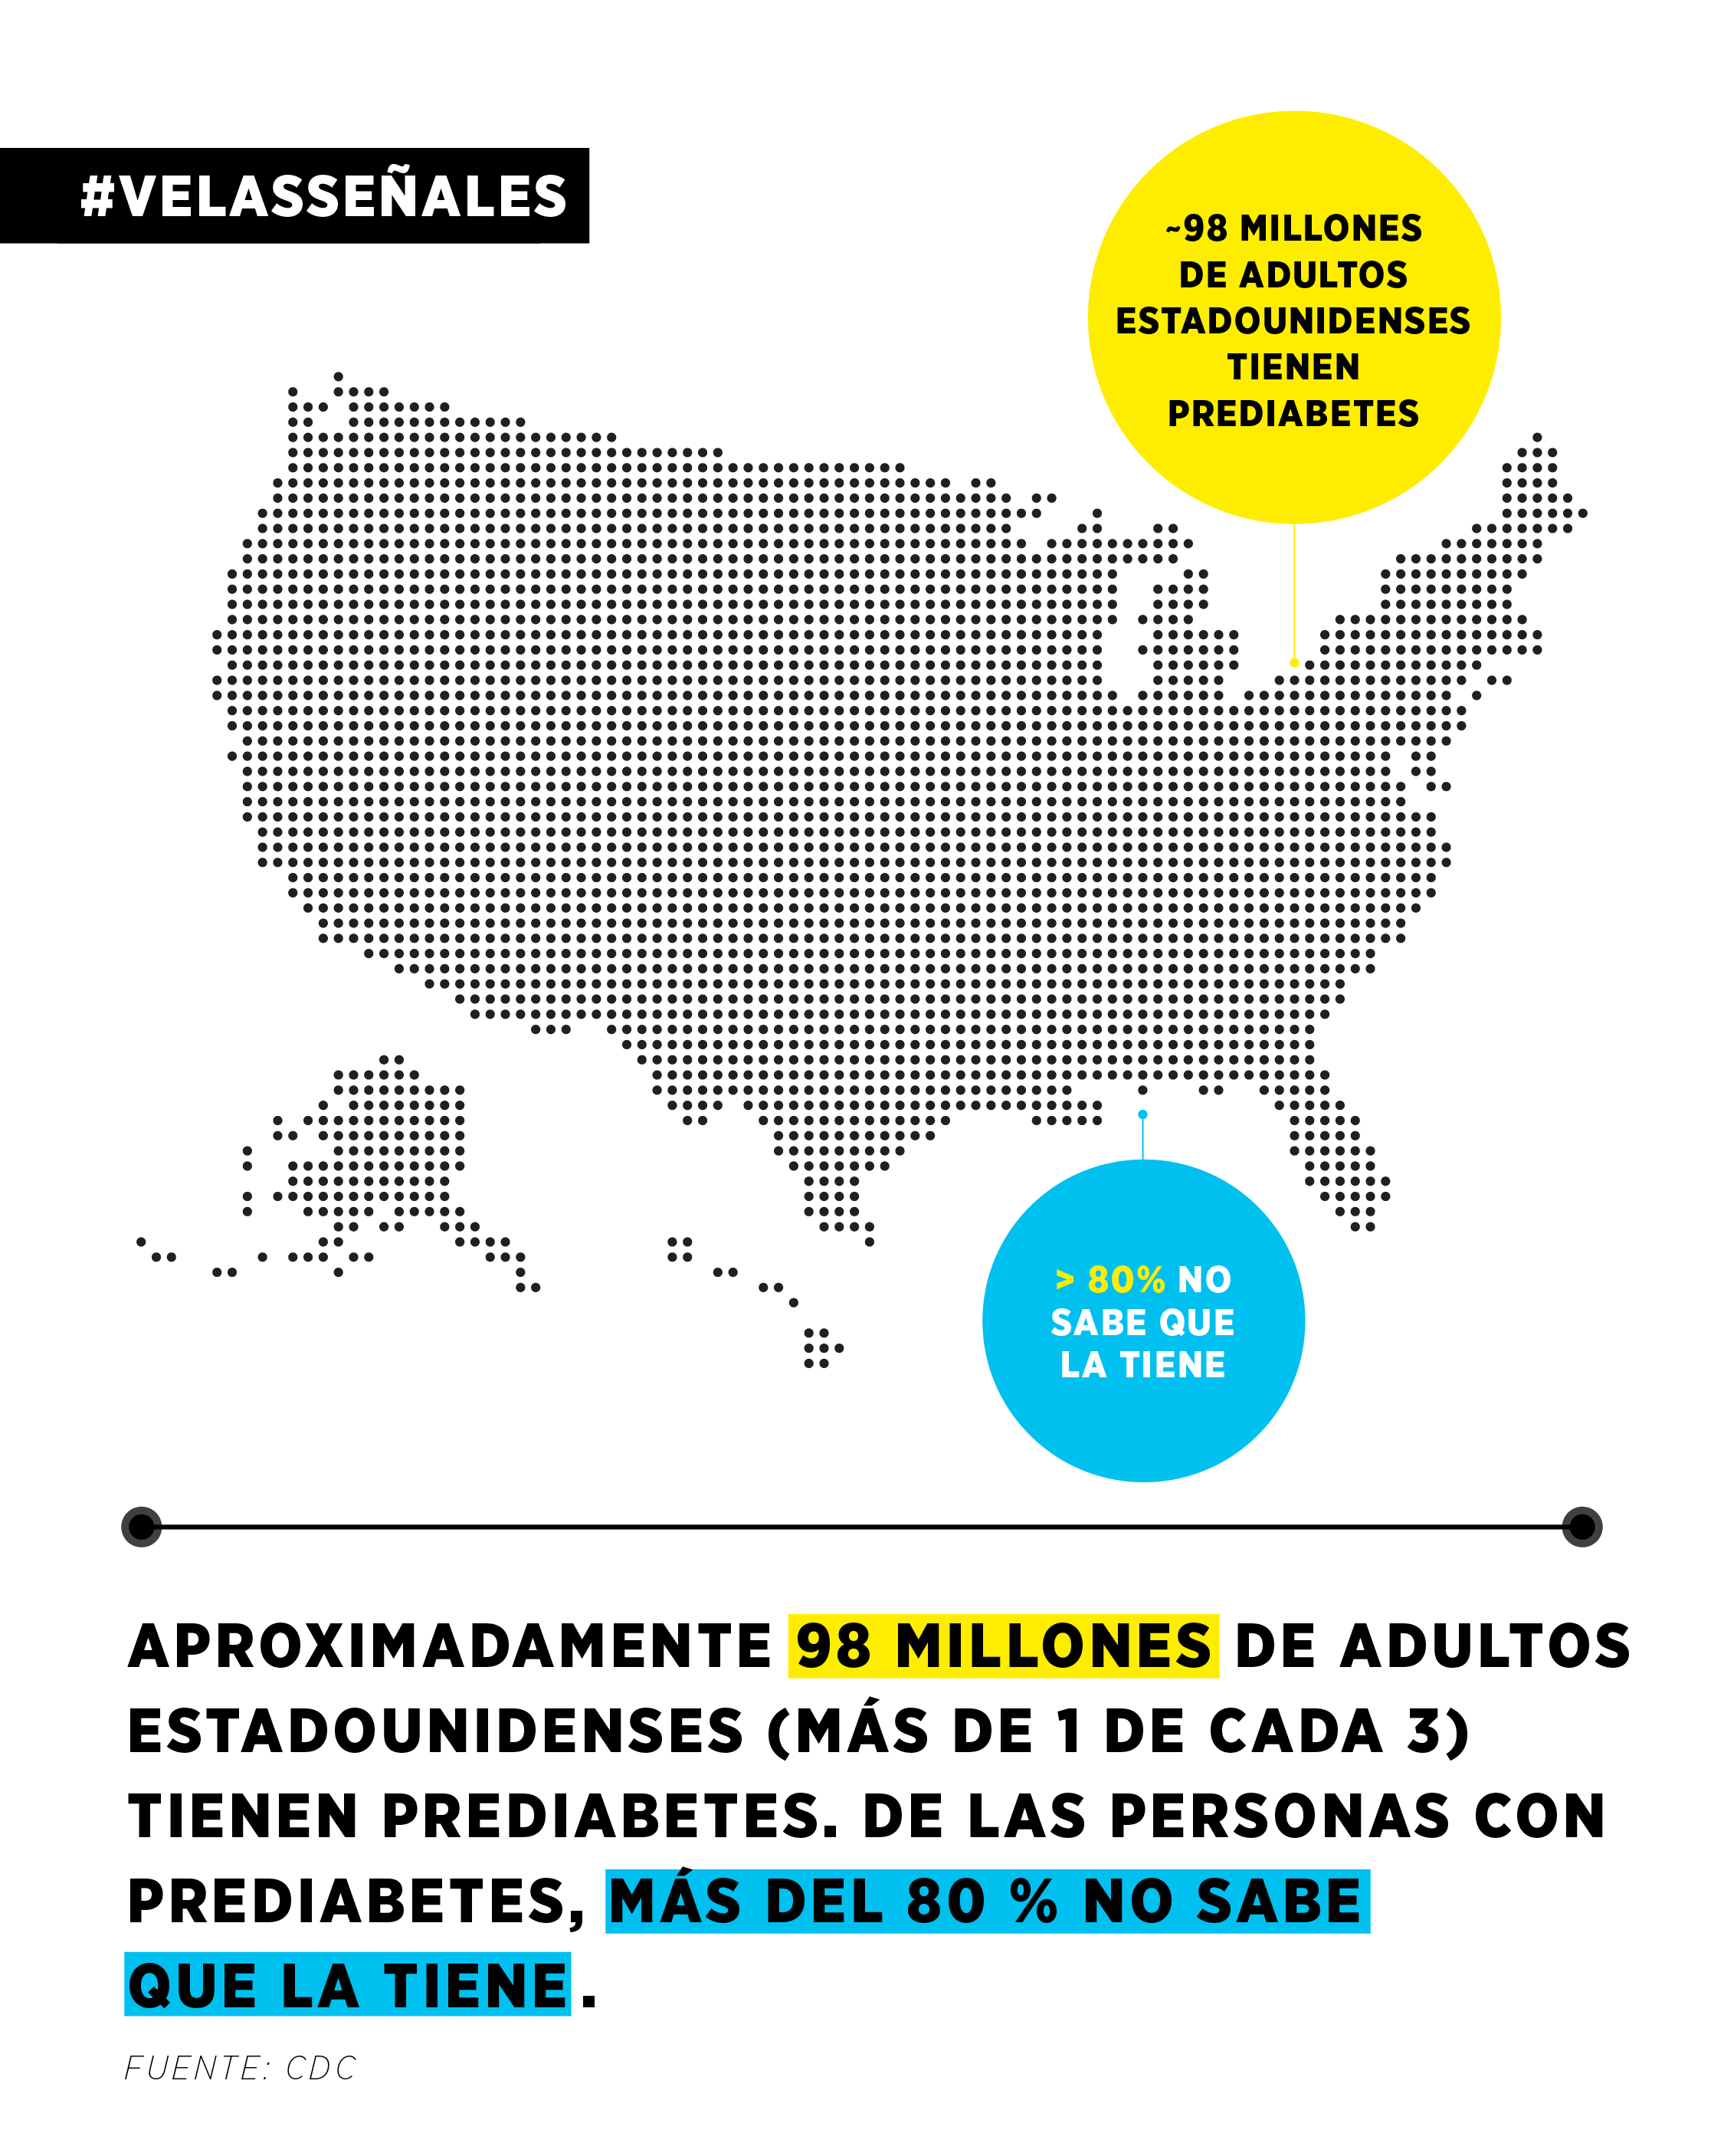 98 million U.S. adults have prediabetes